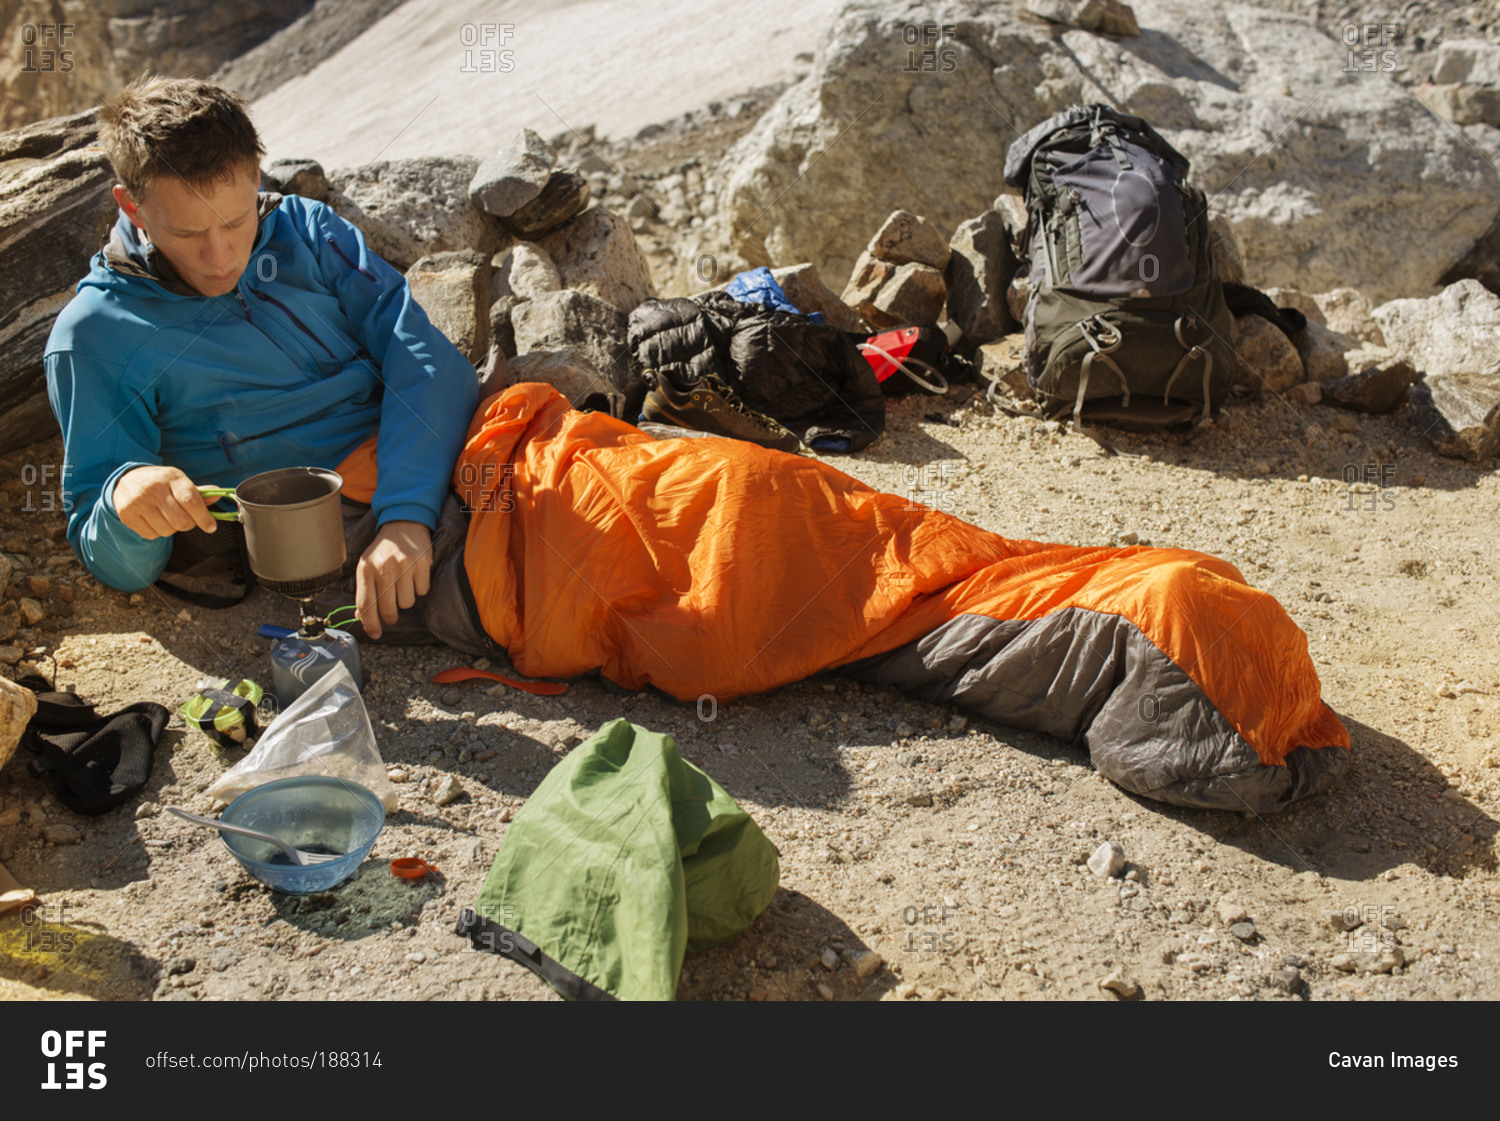 Man in sleeping bag operating camp stove